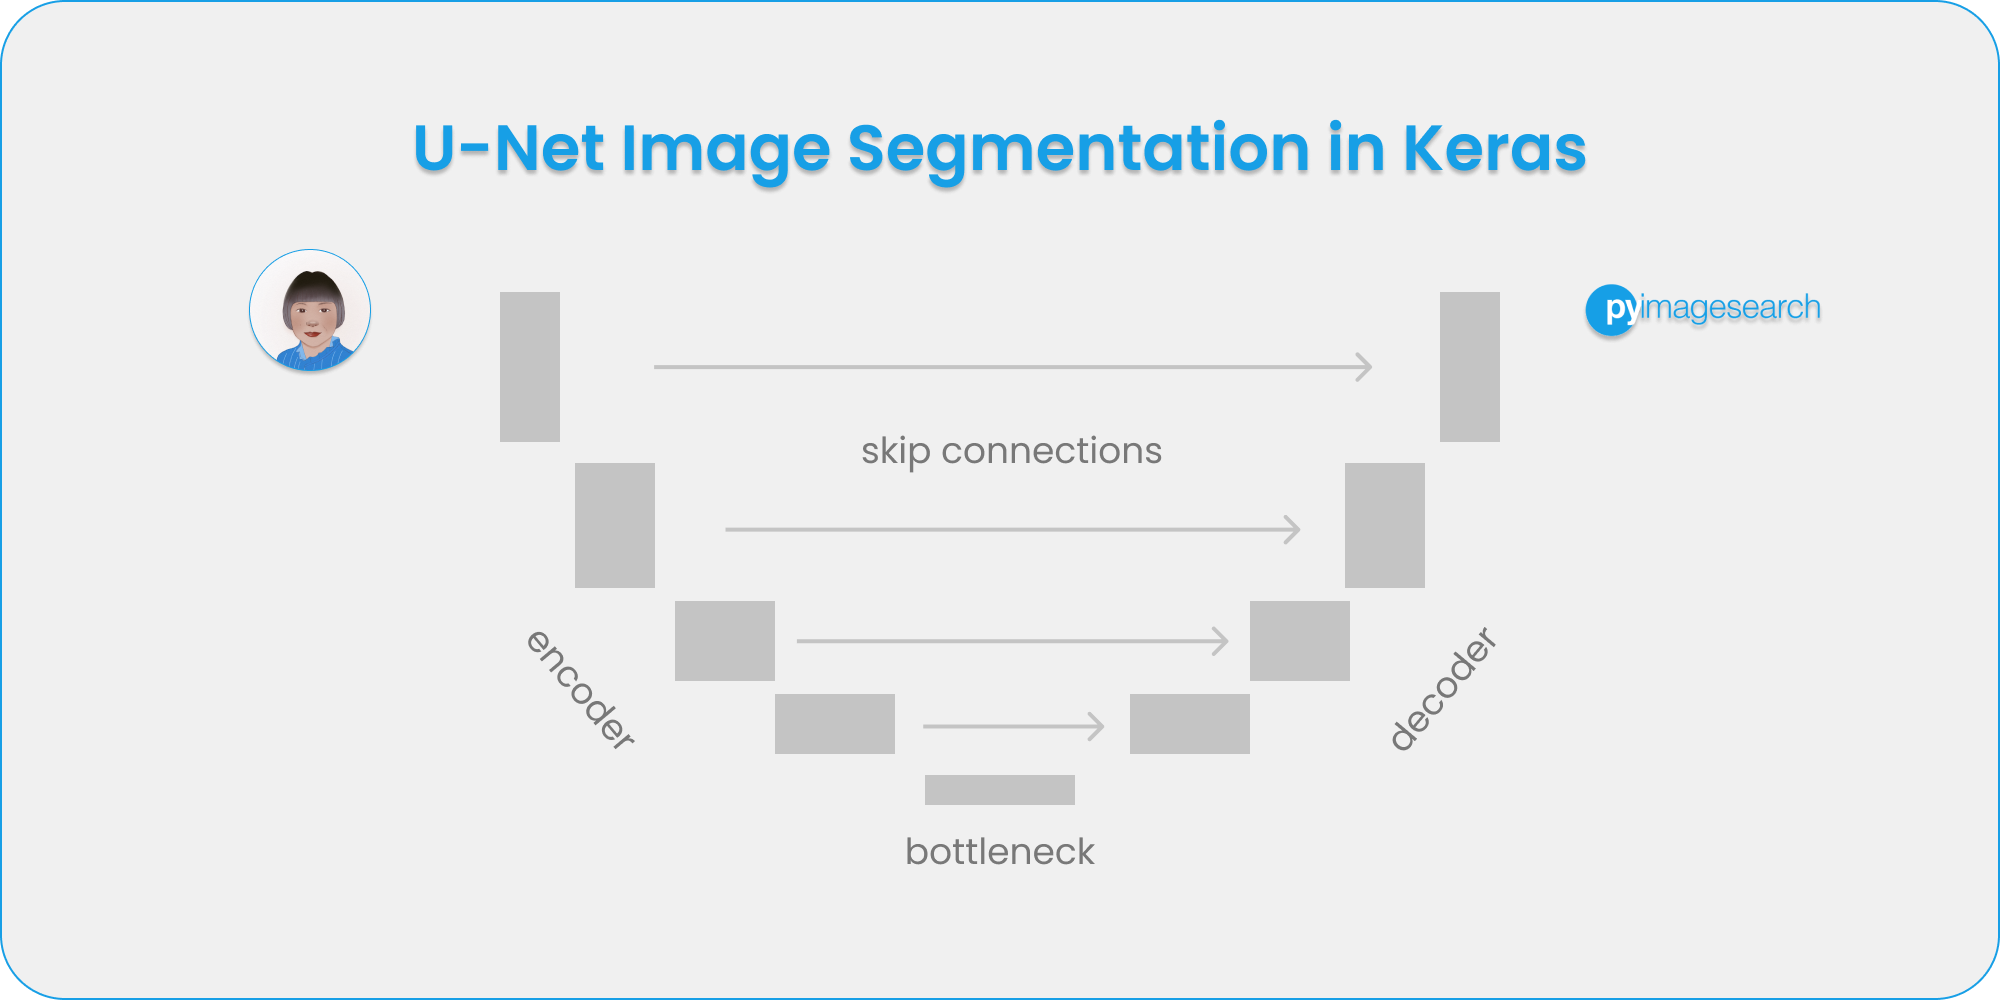 U-Net Image Segmentation in Keras